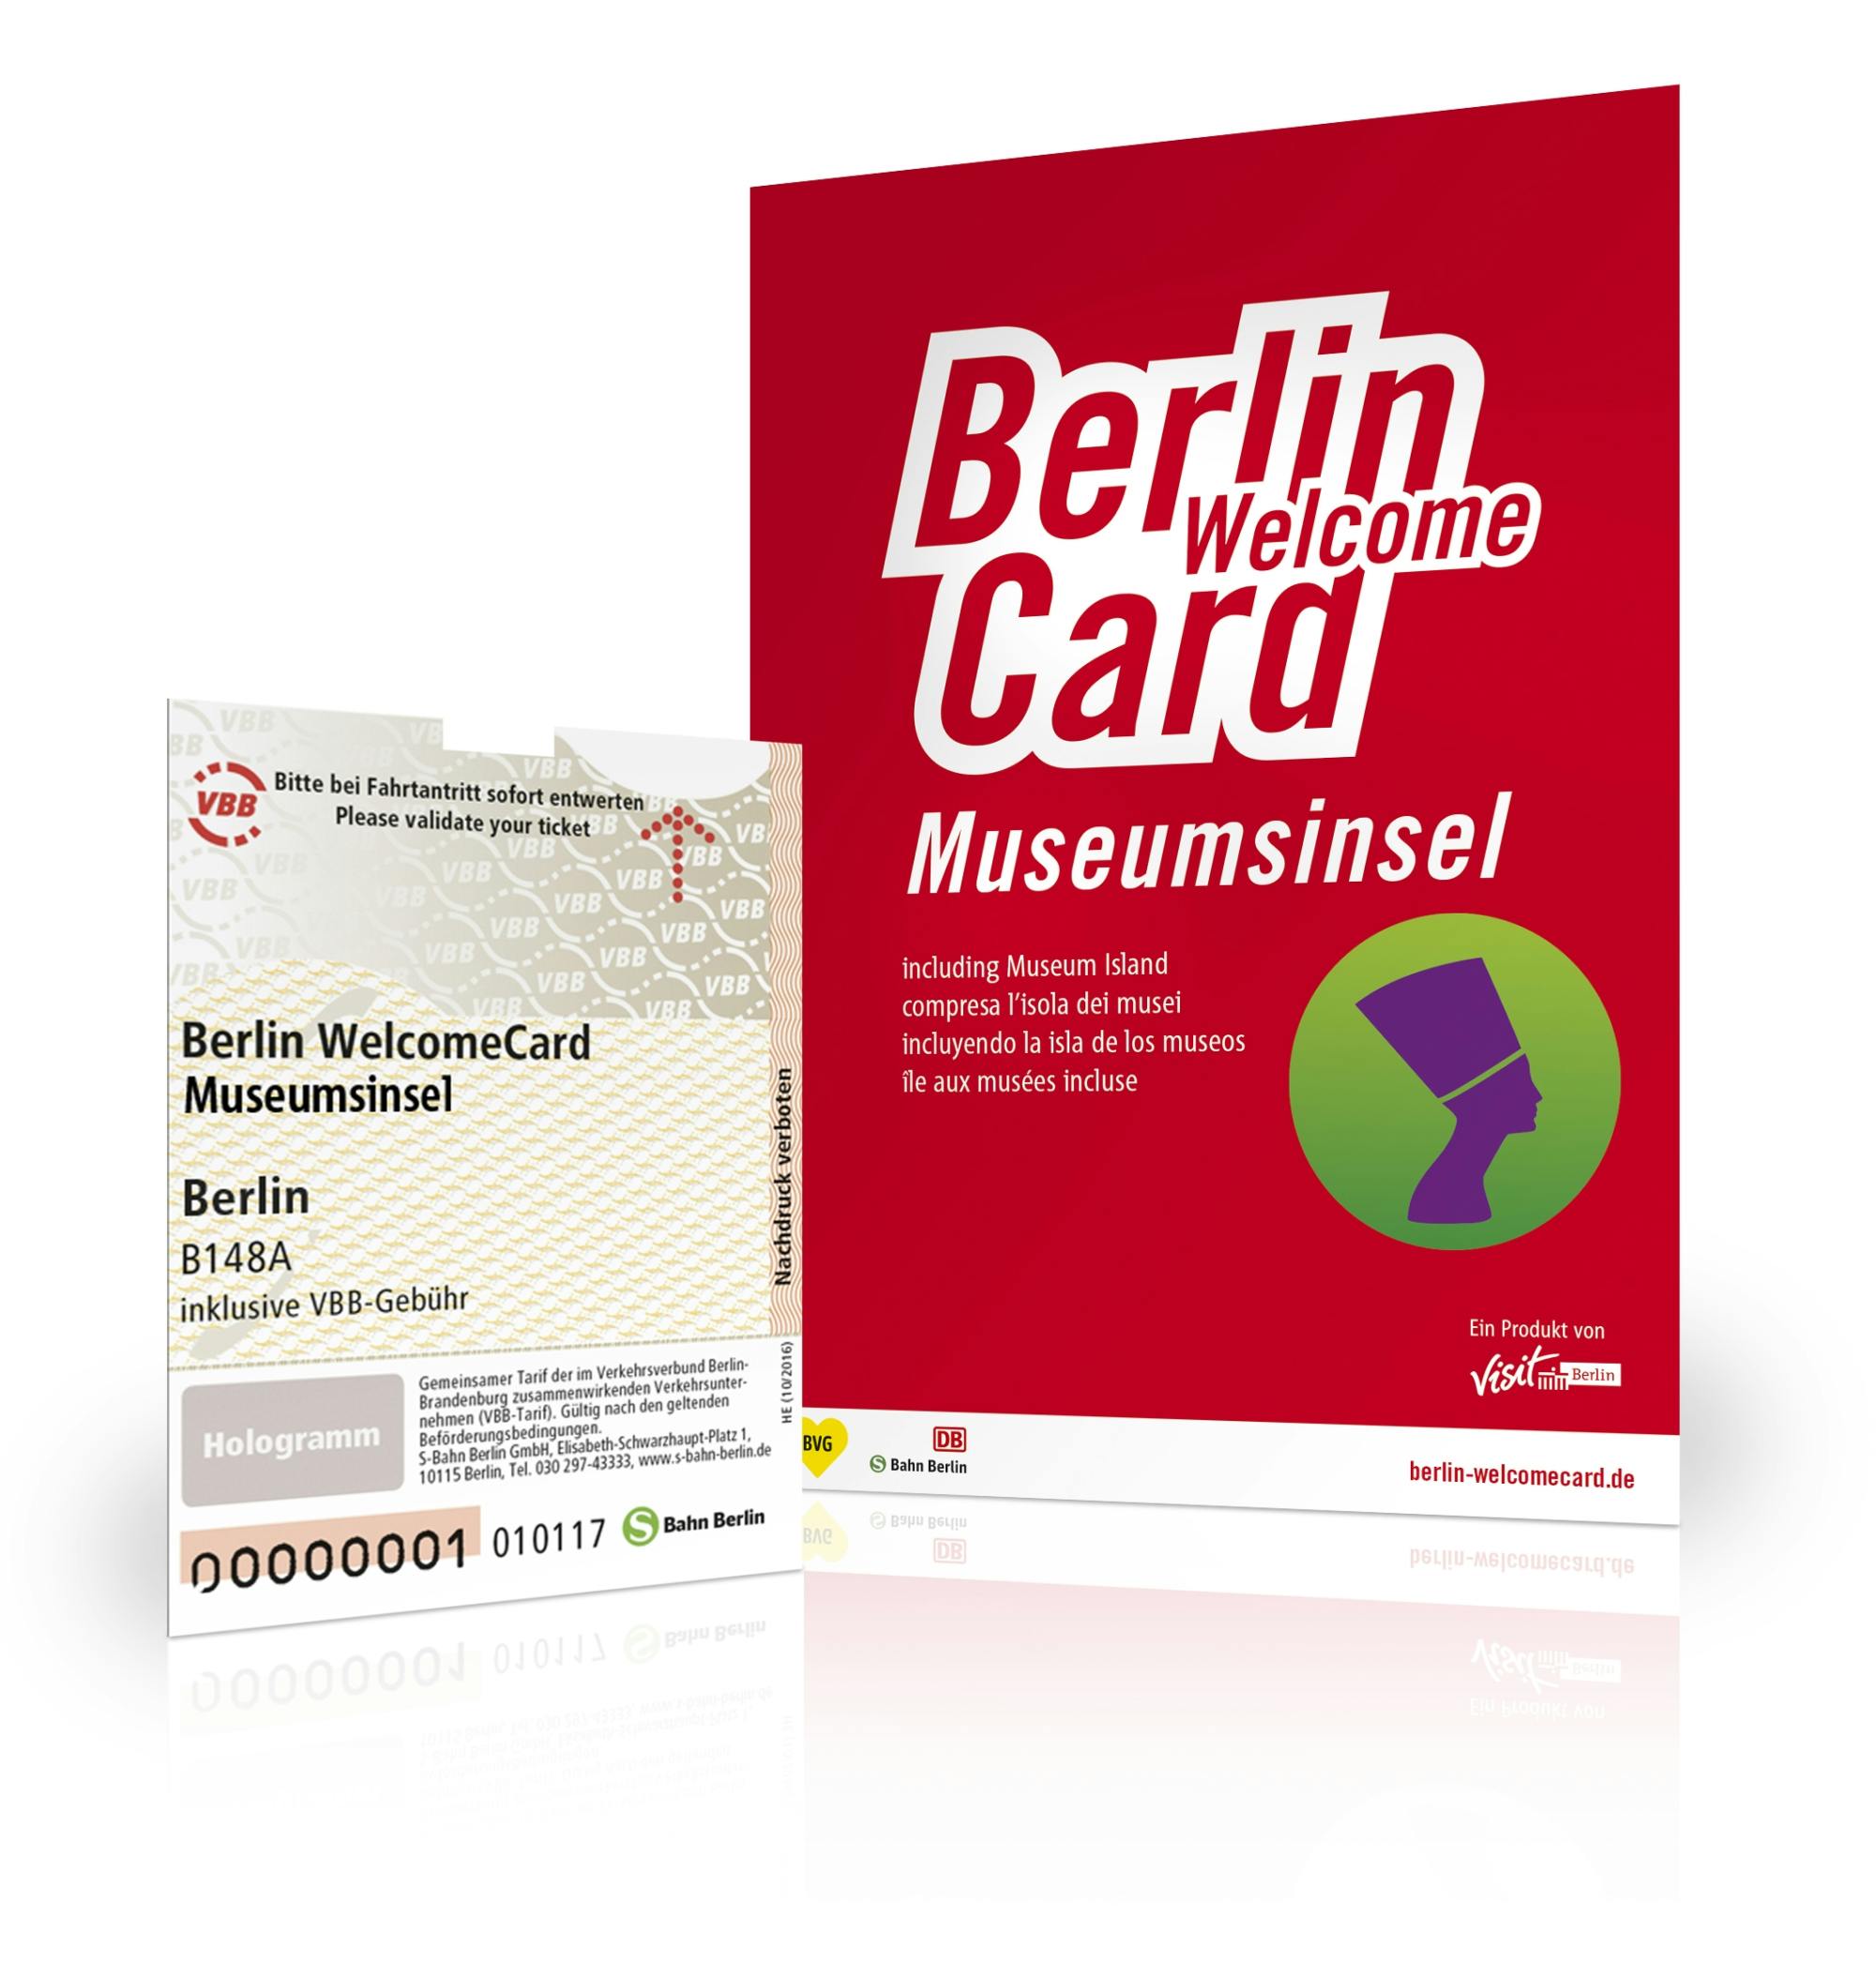 Berlin WelcomeCard met toegang tot het Museumeiland